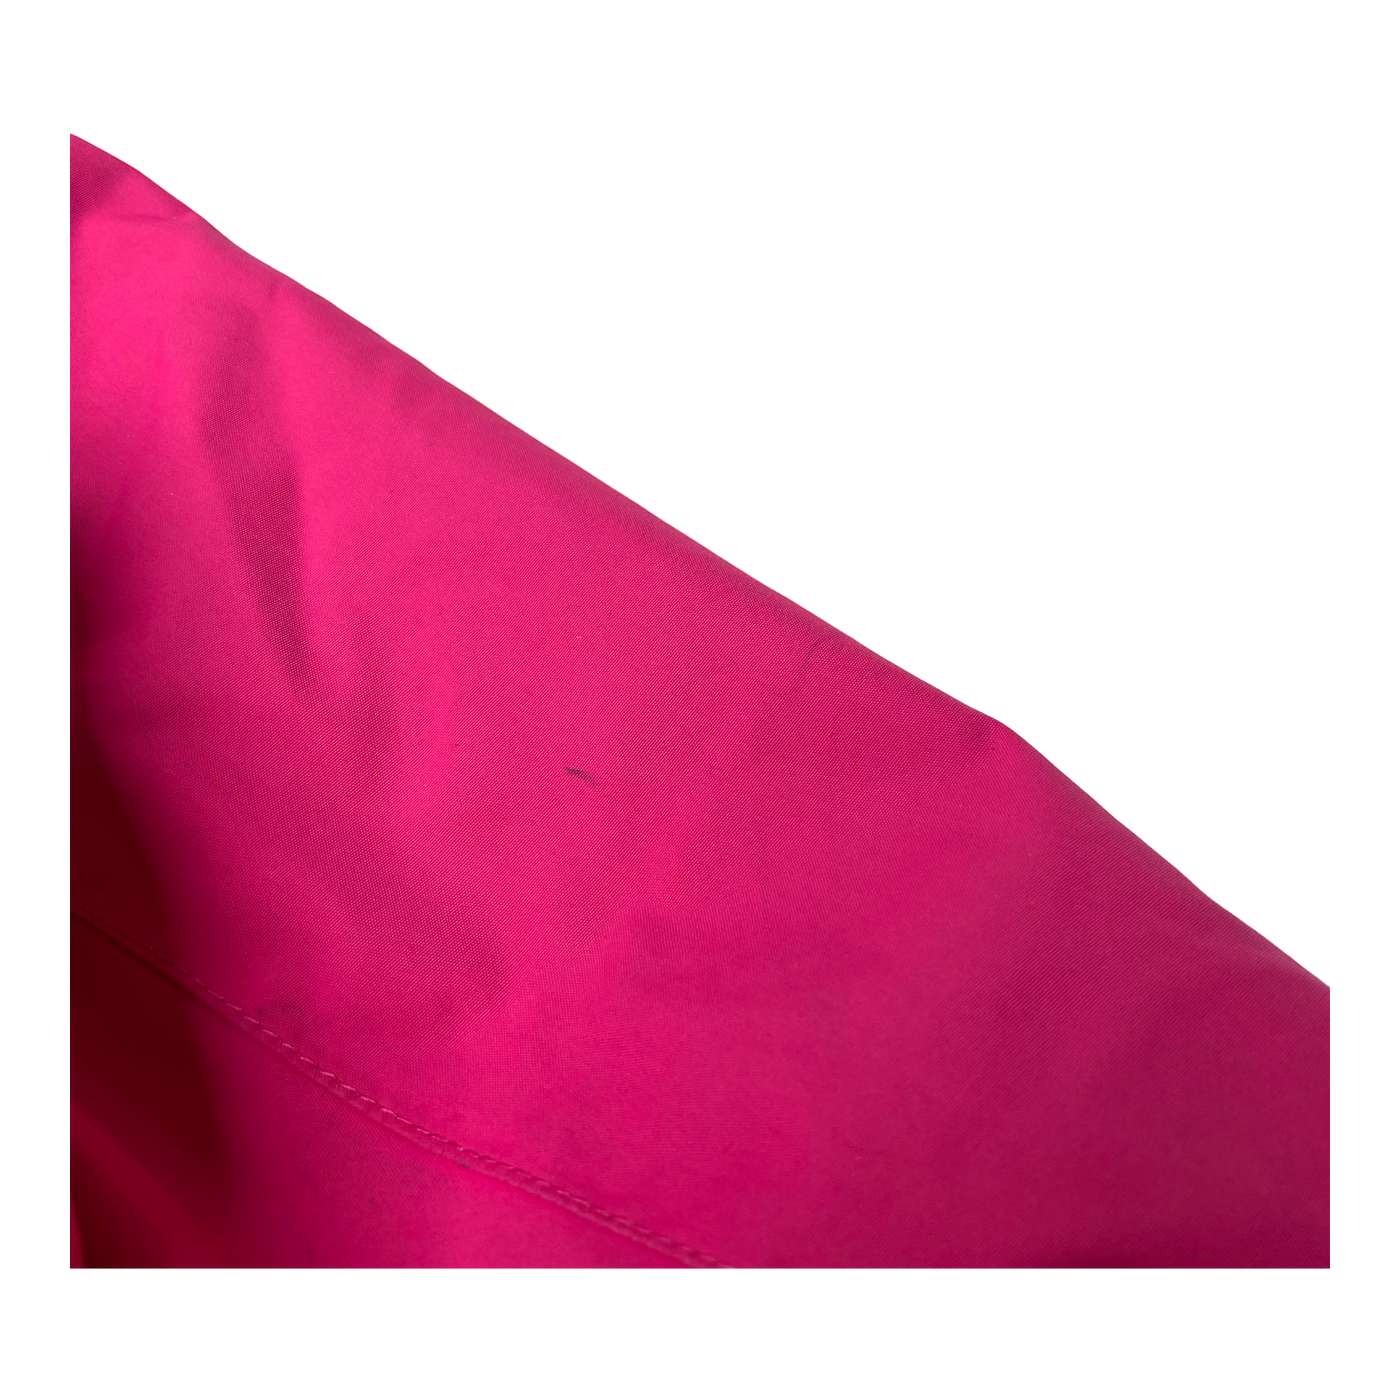 Reima shell jacket, deep pink | 128cm